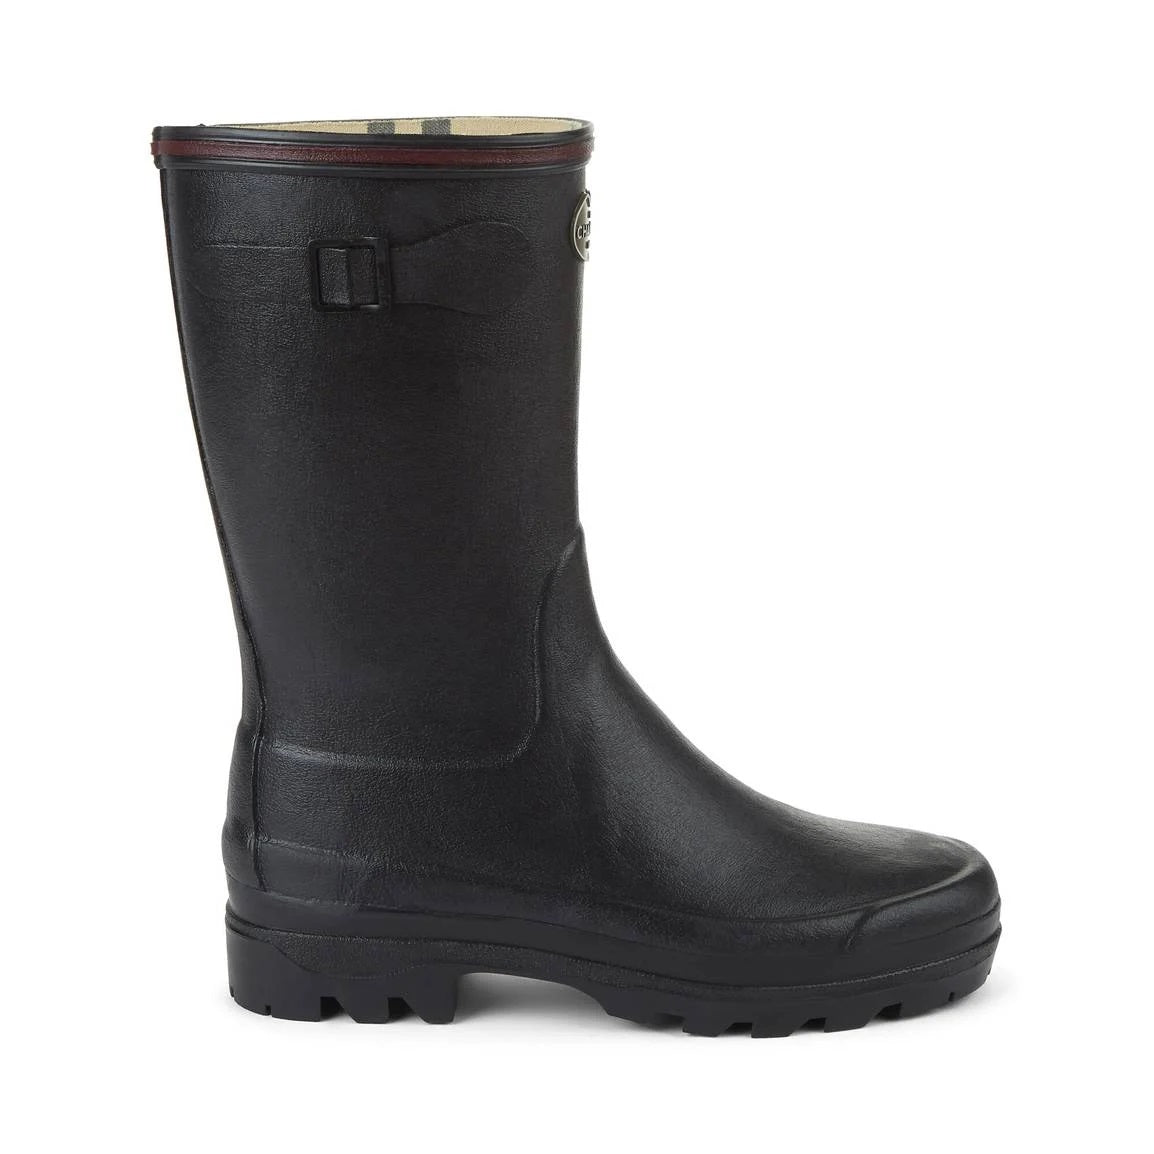 LE CHAMEAU Boots - Ladies Giverny Jersey Lined Bottillon - Black